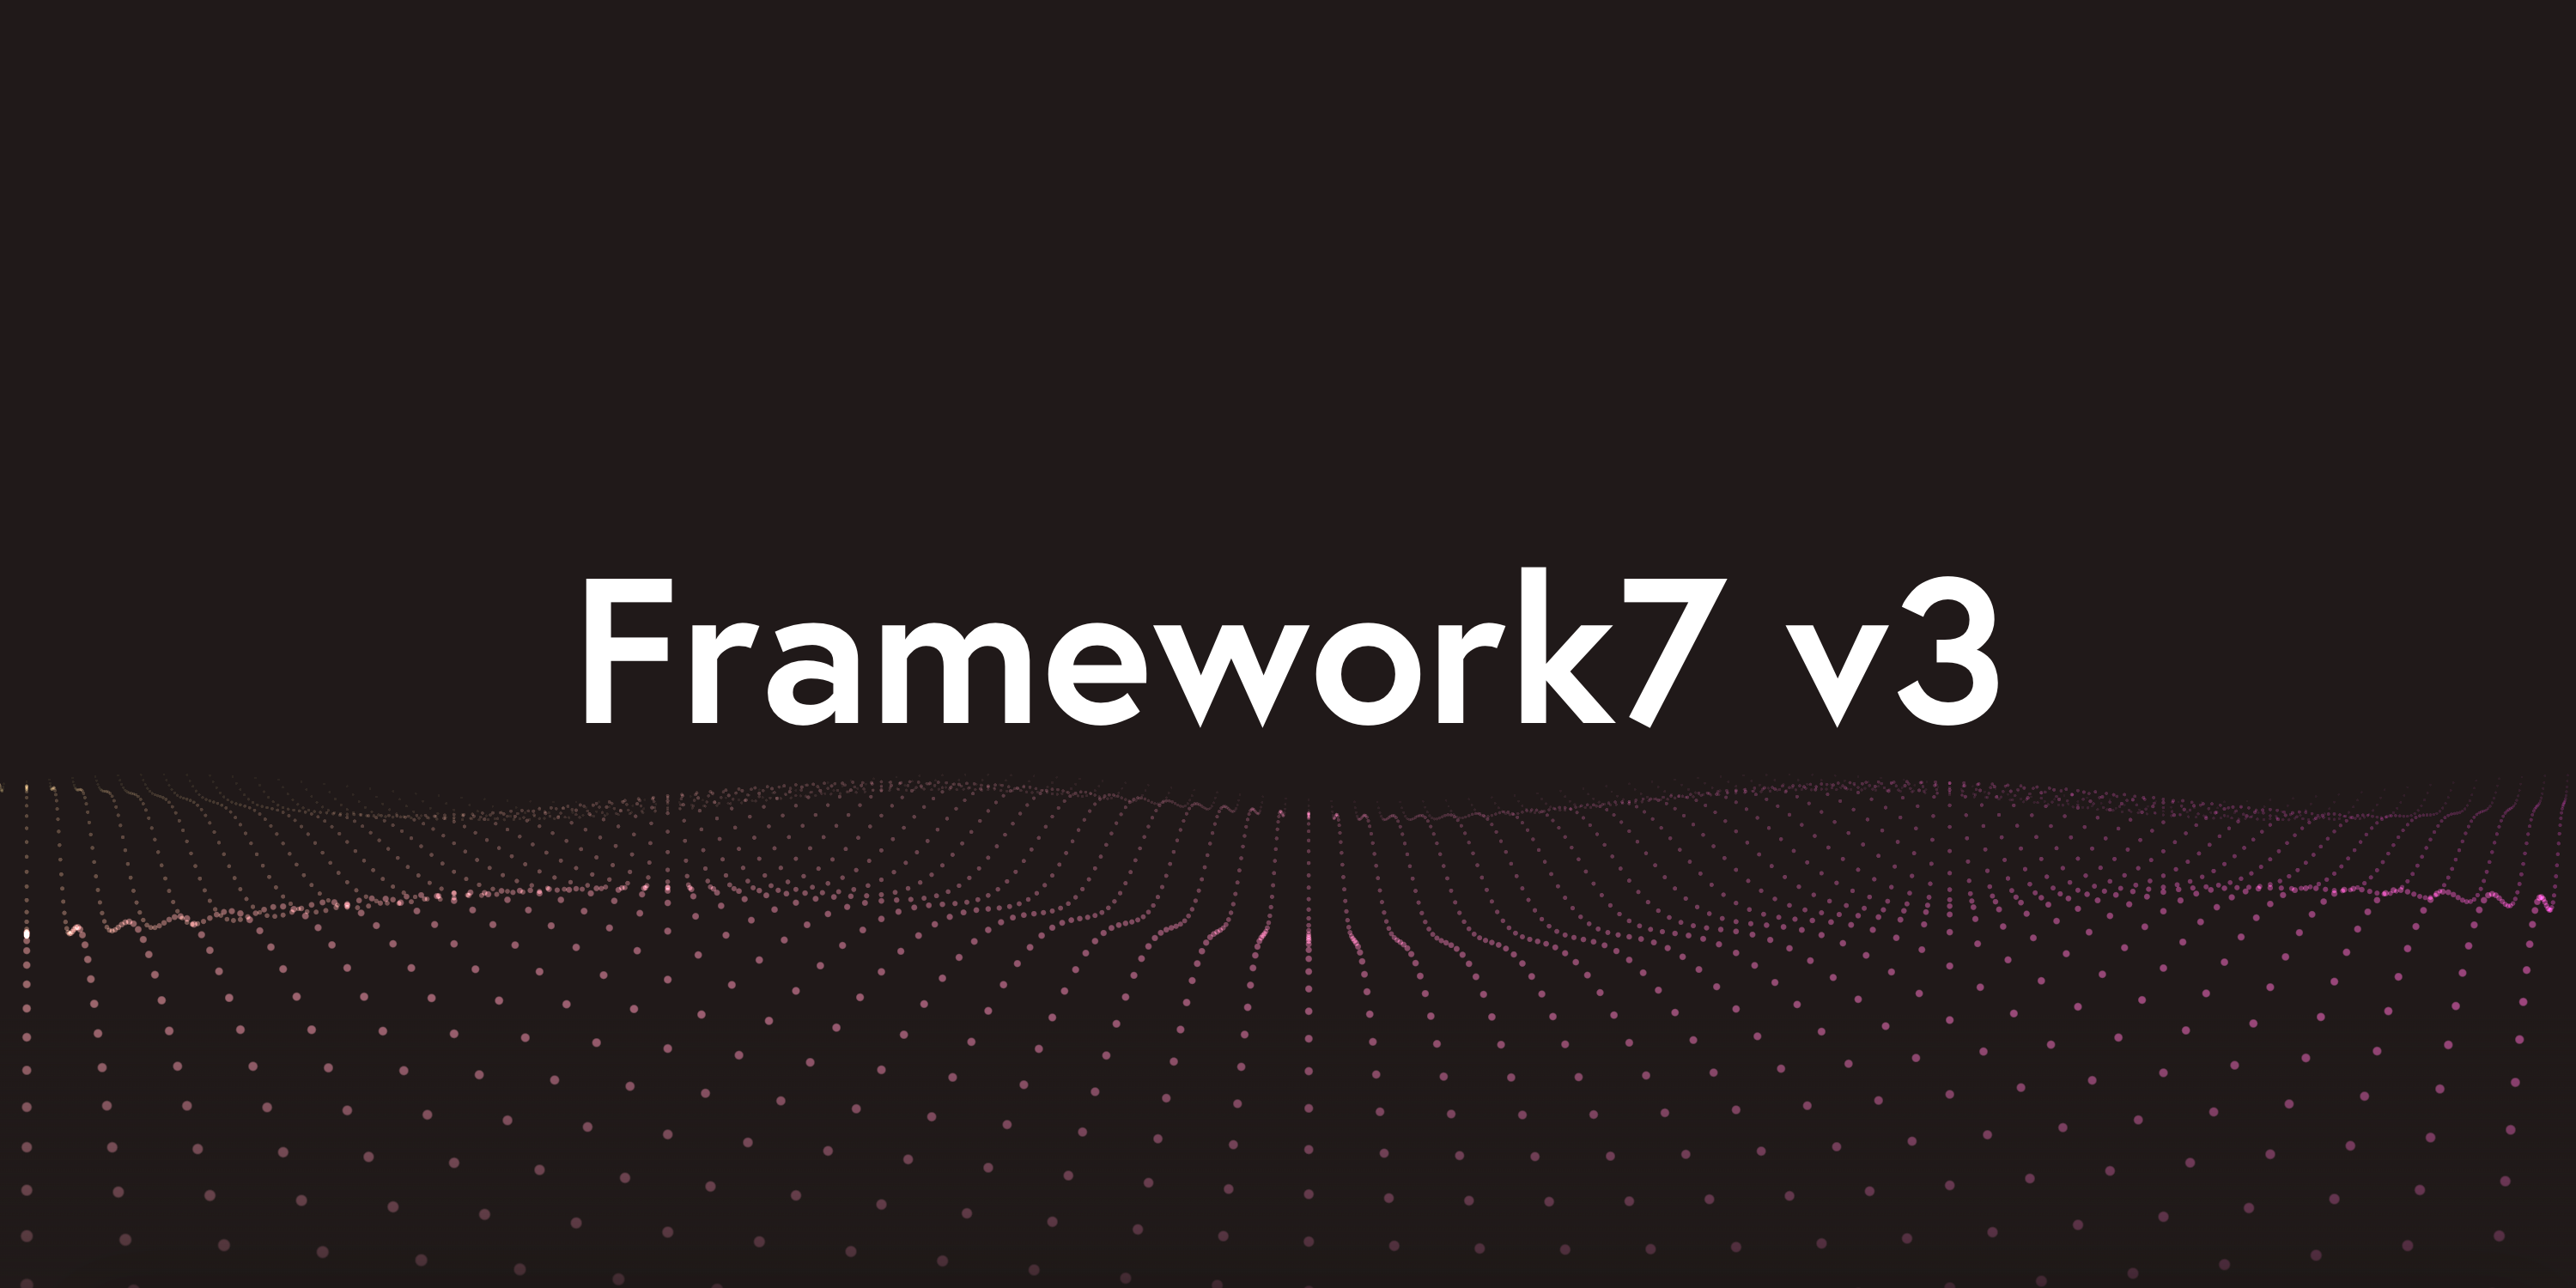 Framework7 v3 Is Coming Soon